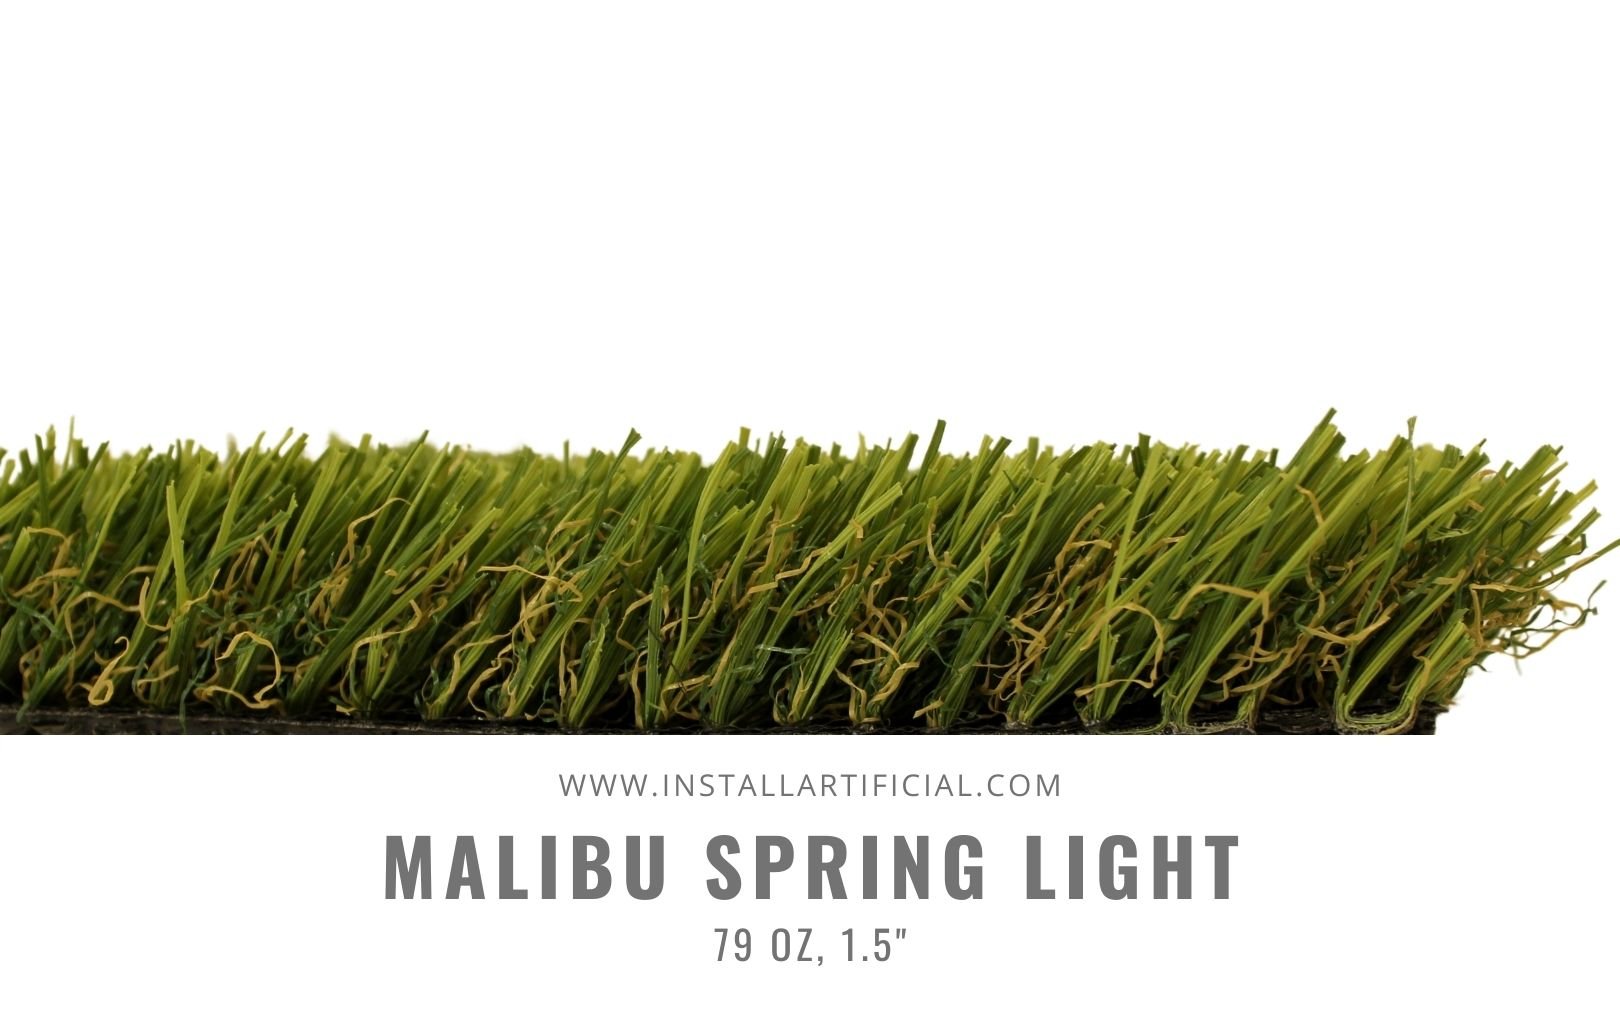 Malibu Spring Light, Tiger Turf, Synthetic Grass Warehouse, side